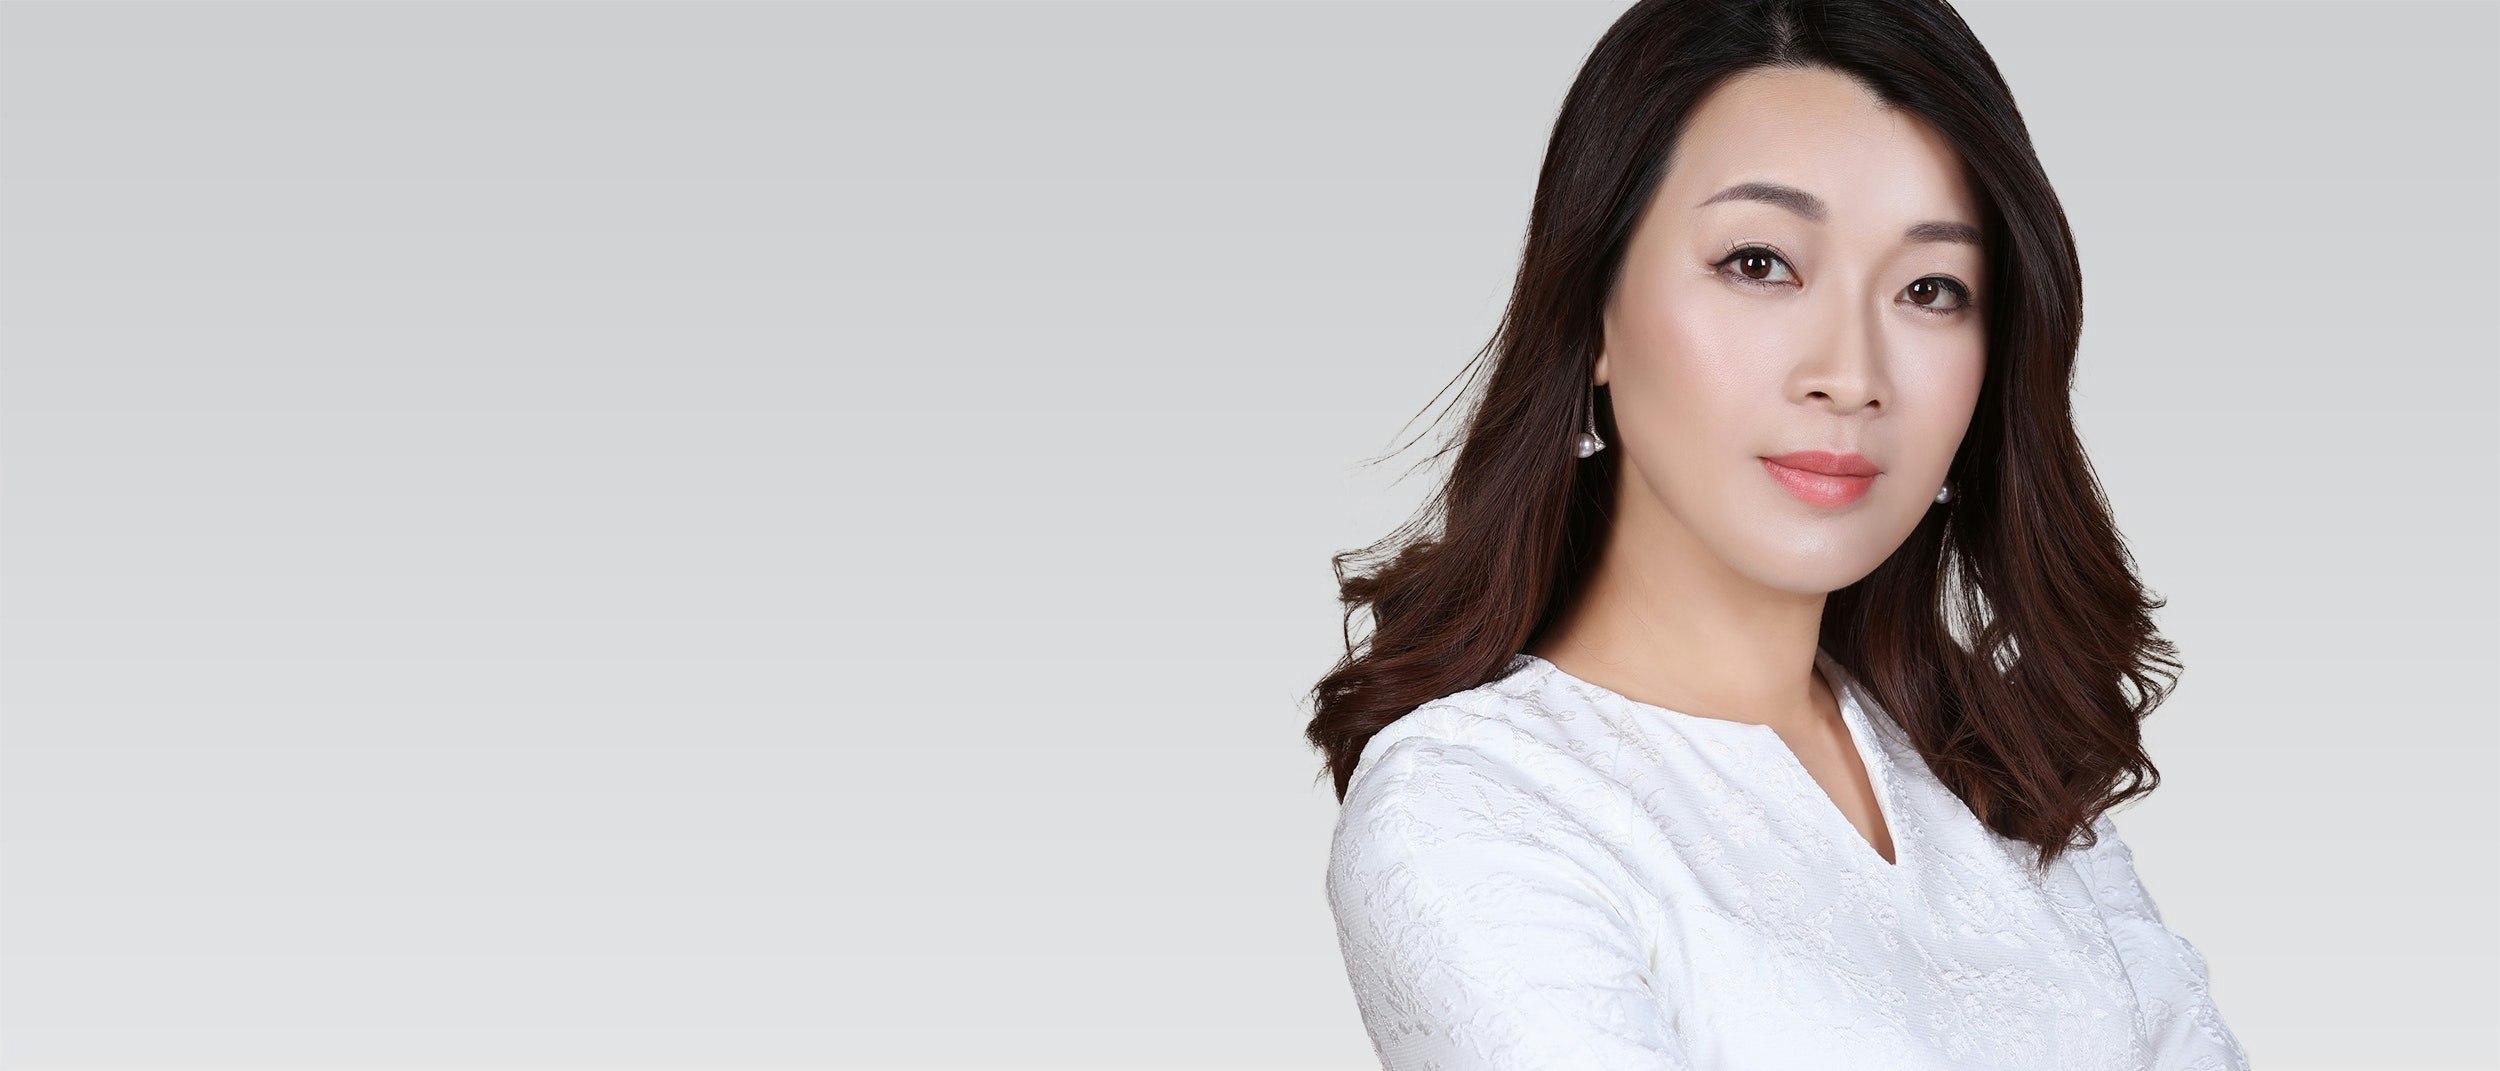 Vision Fund team member Joanne Xu's profile photo